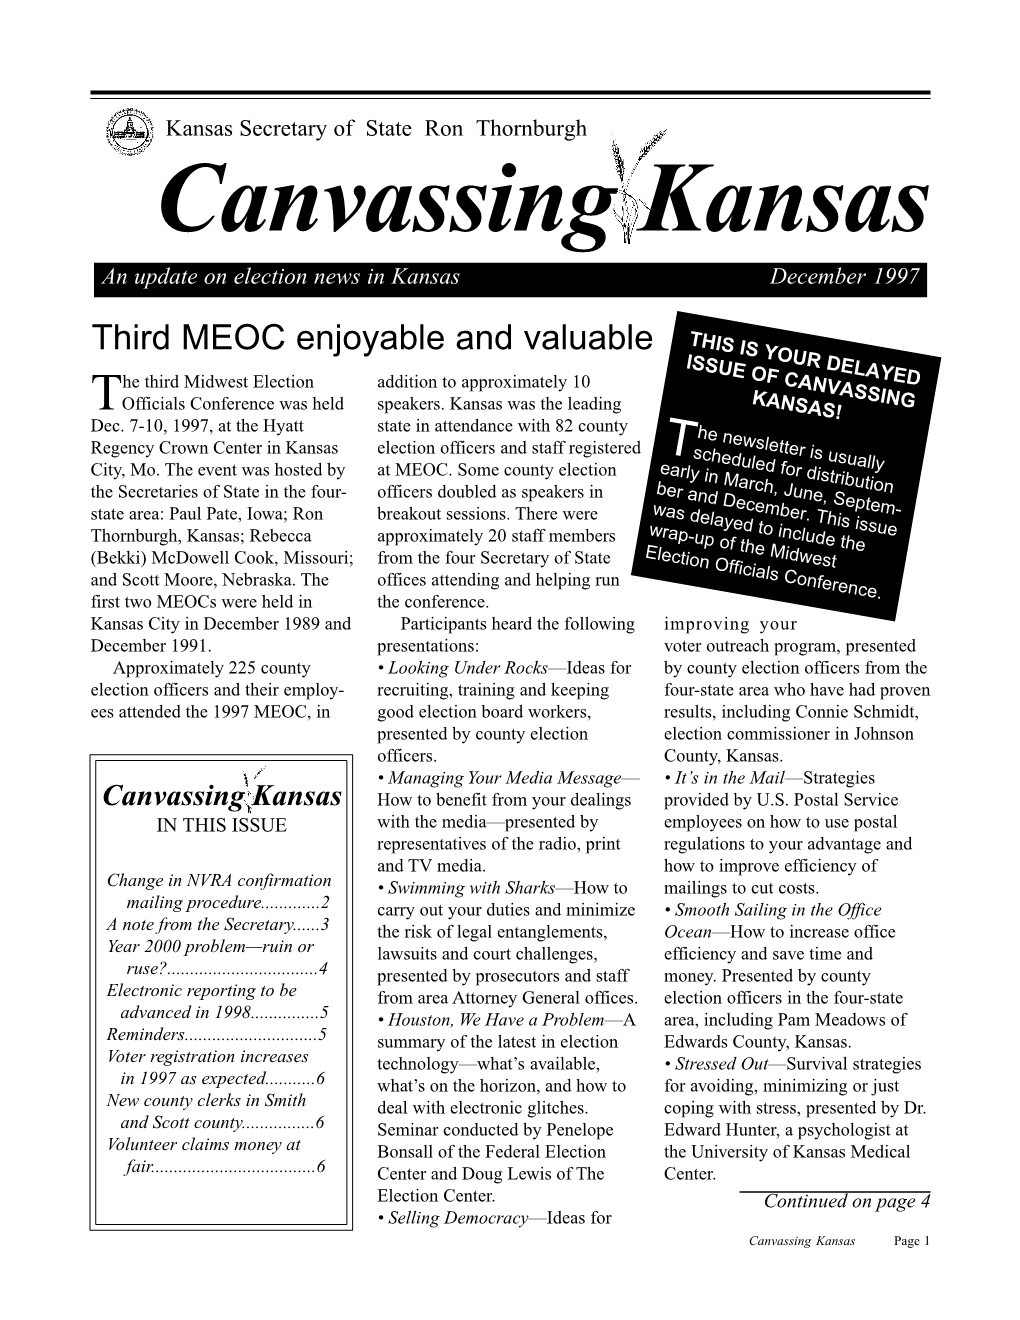 Canvassing Kansas